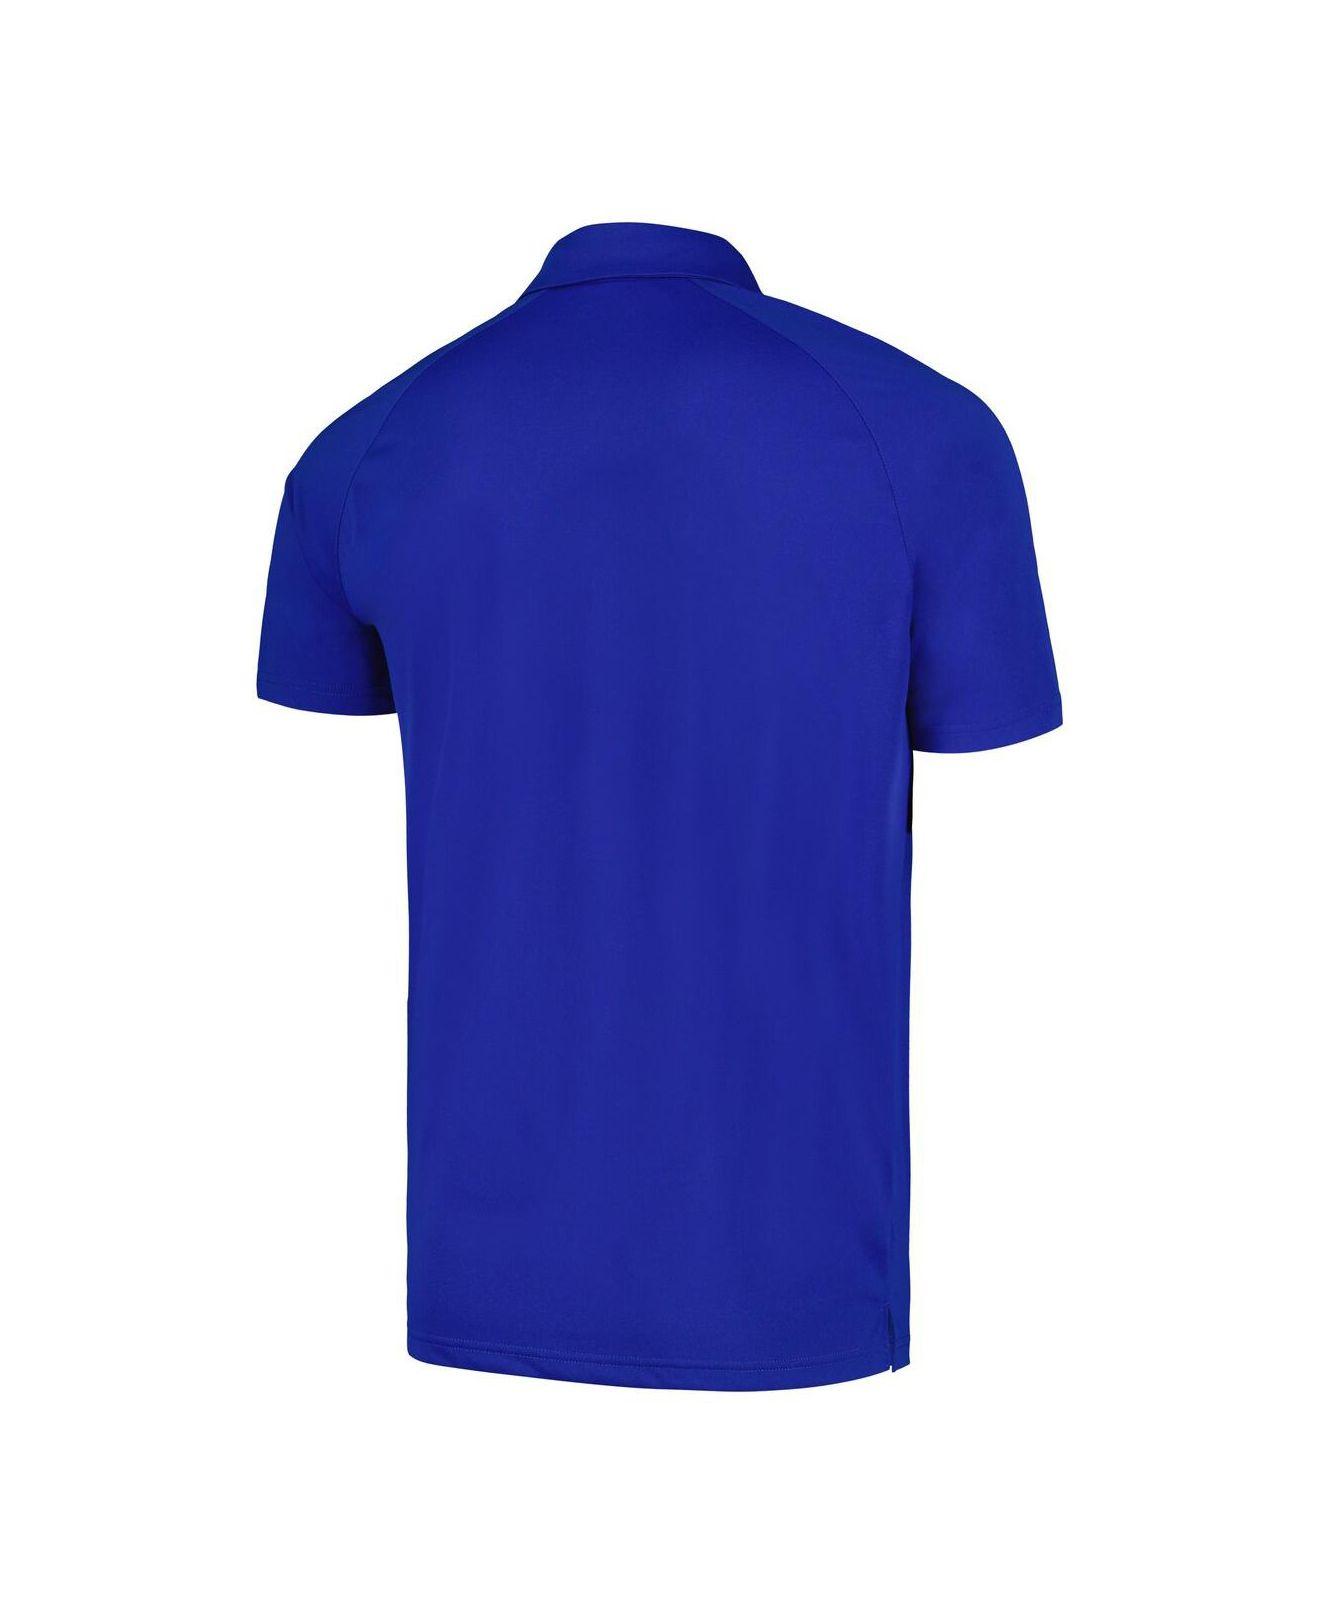 royal blue phillies shirt